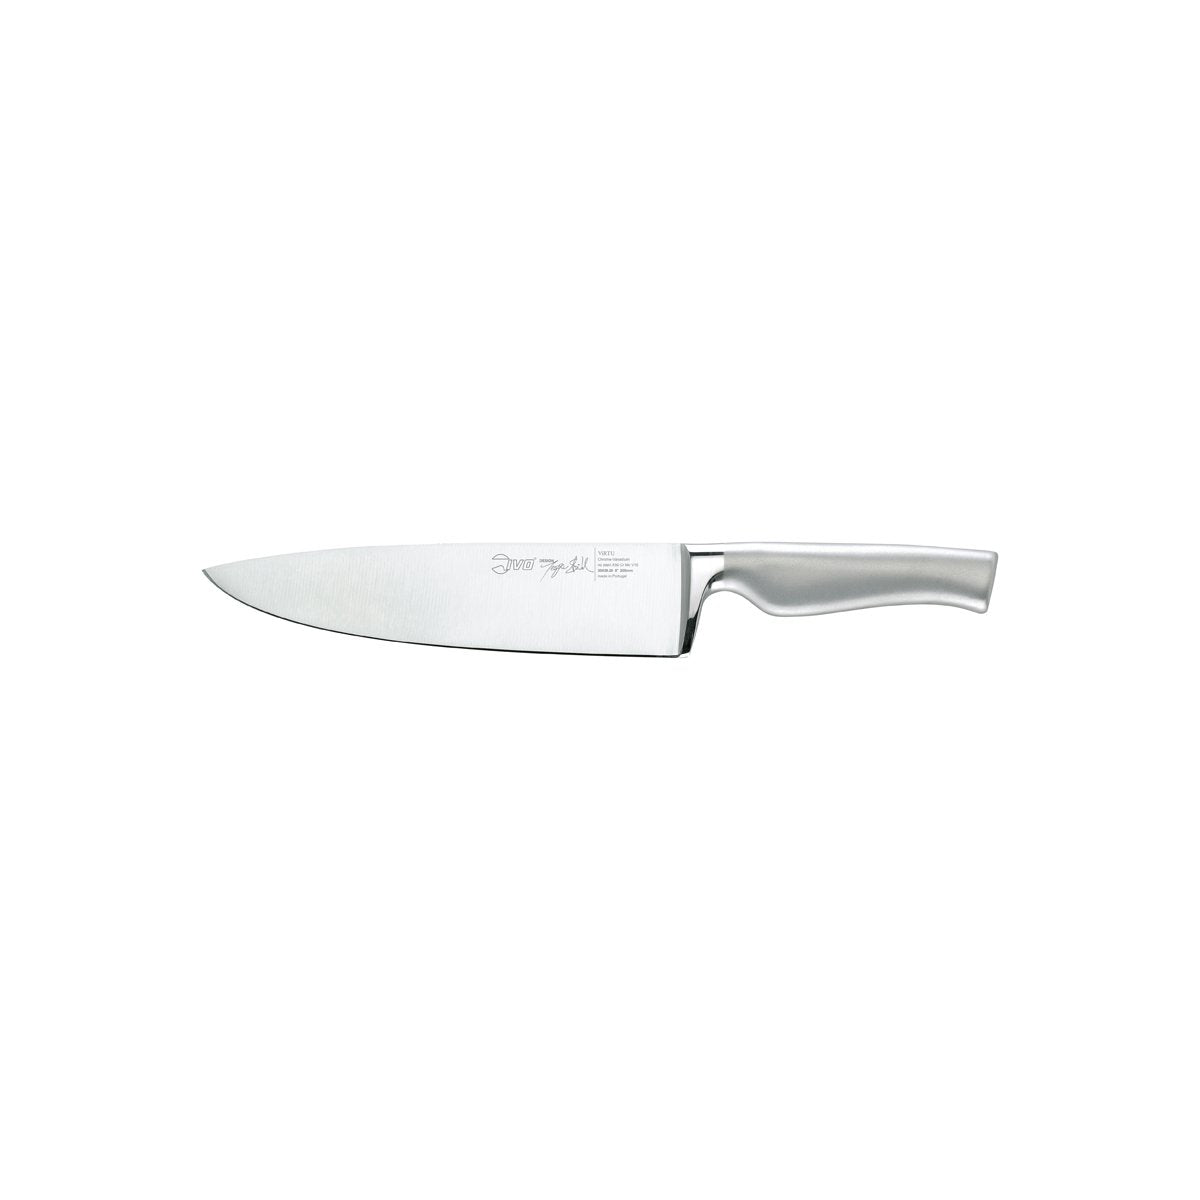 26072 Ivo Virtu Chefs Knife 200mm Tomkin Australia Hospitality Supplies